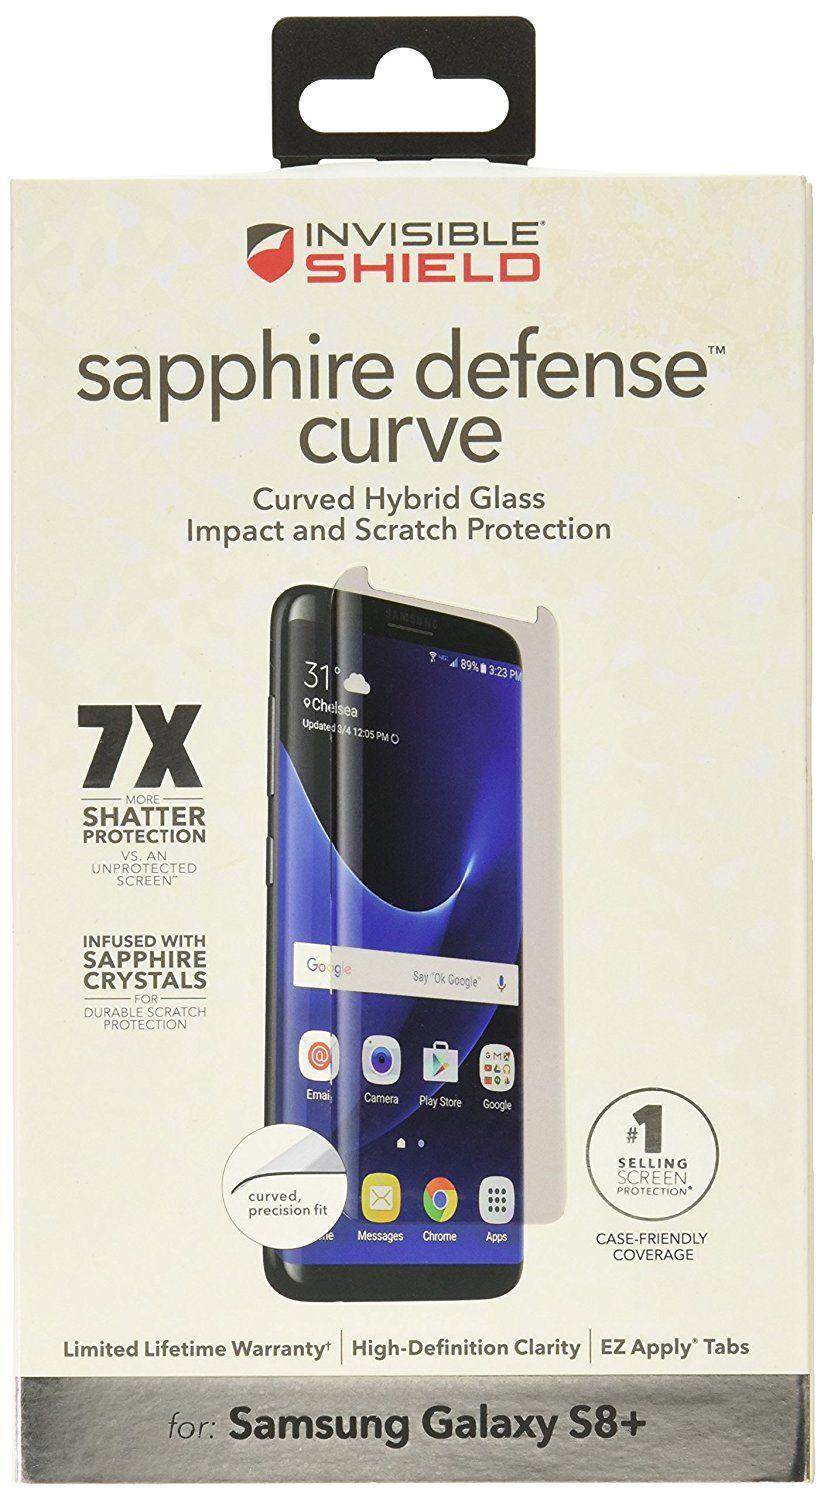 invisibleSHIELD Logo - ZAGG InvisibleShield Sapphire Defense Hybrid Glass Screen Protector